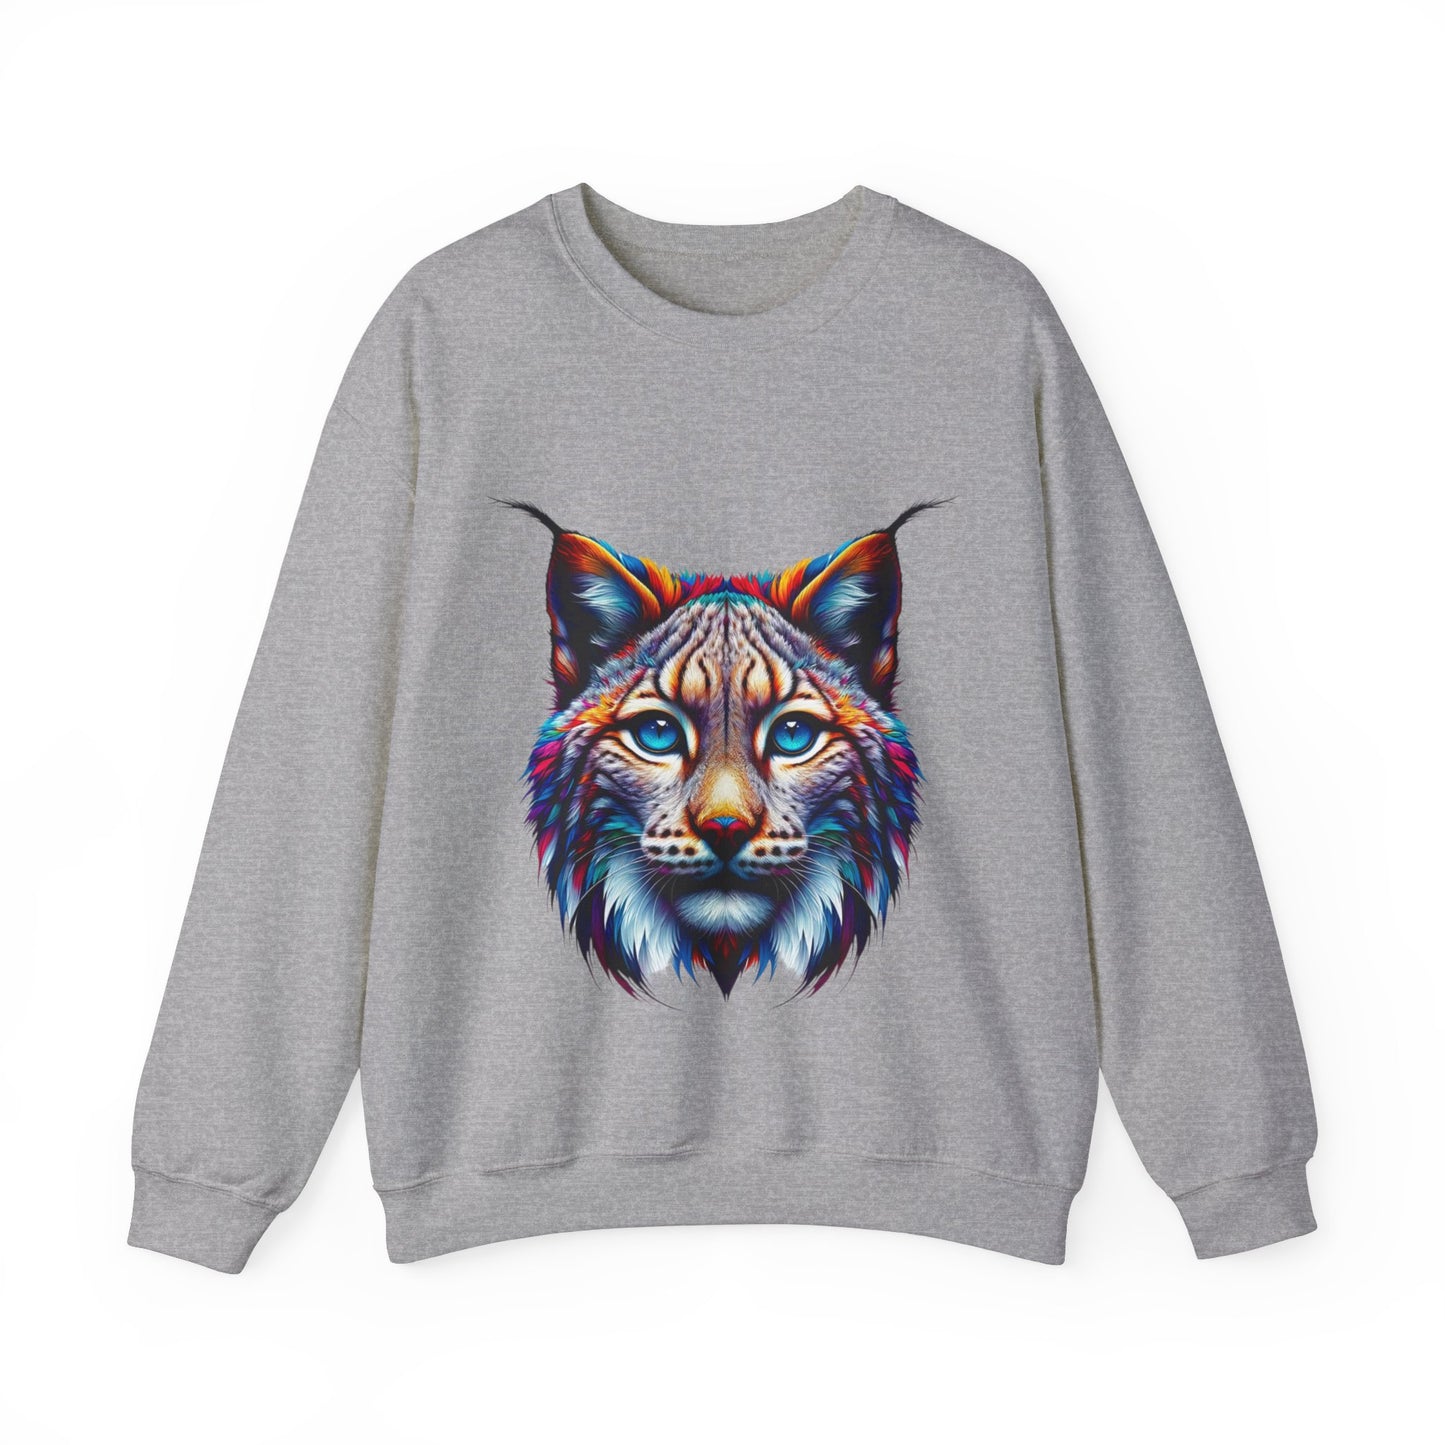 Lynx Head Sweatshirt for the True Nature Lover